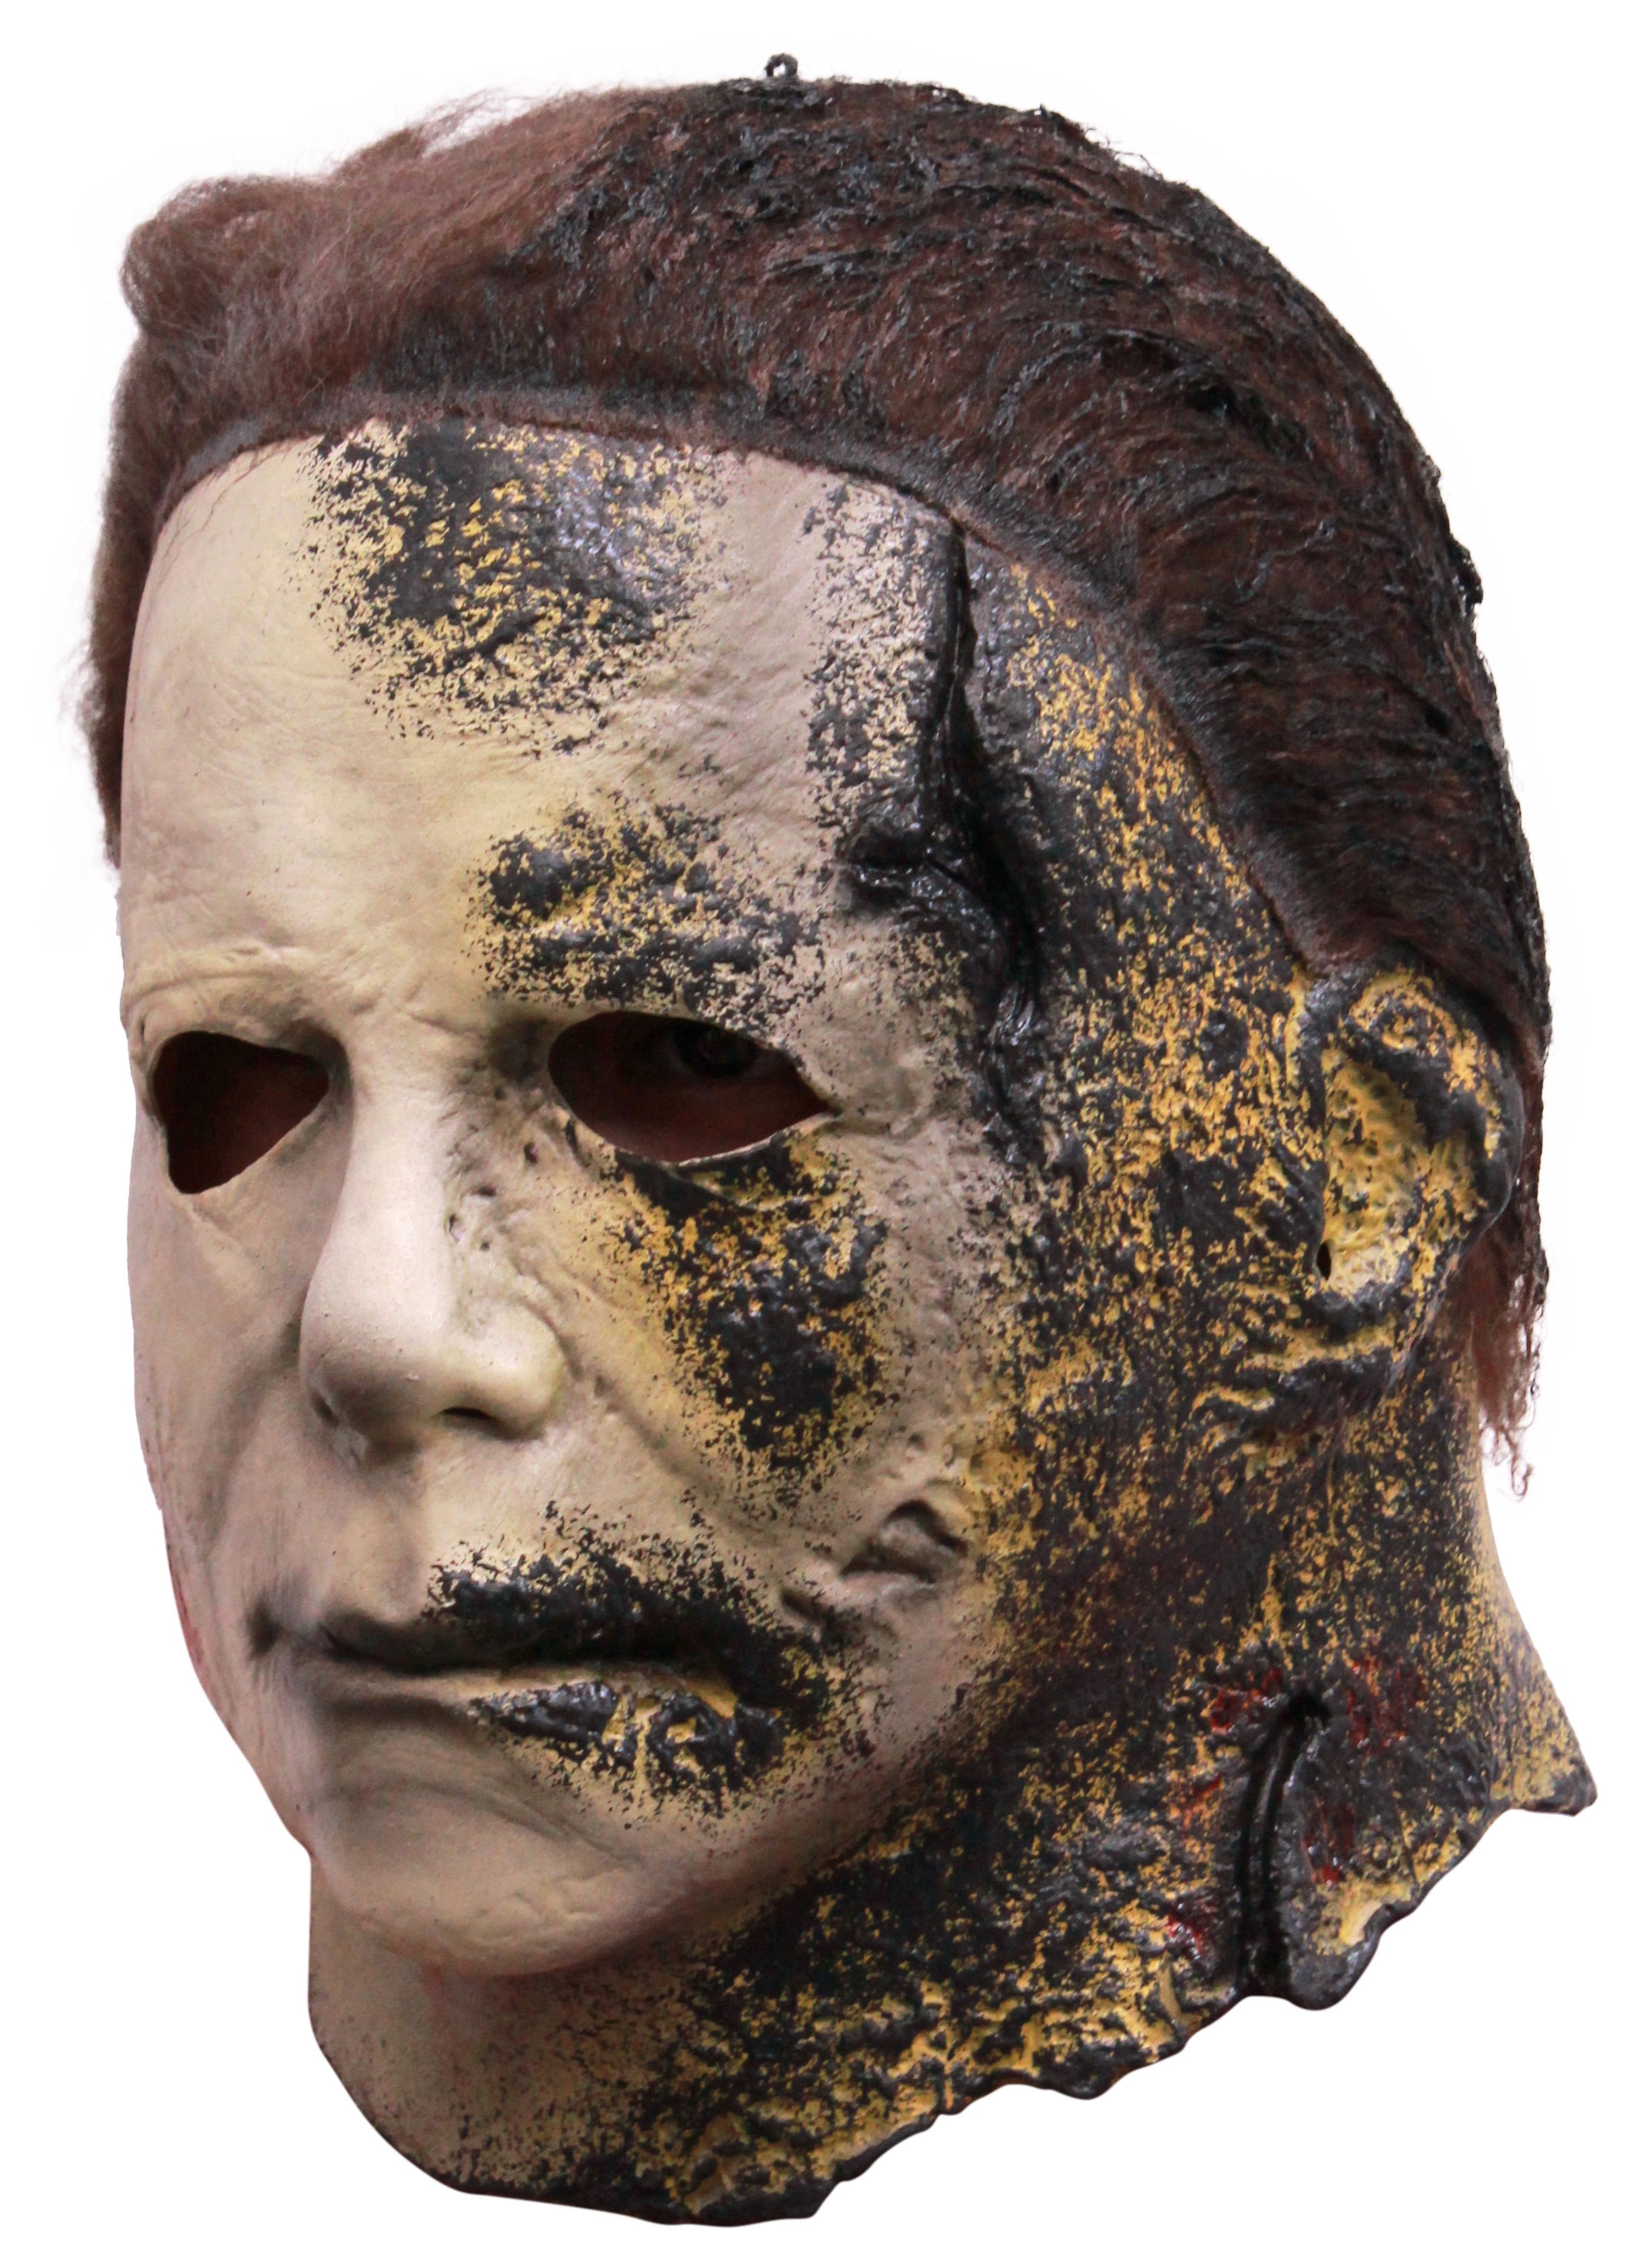 Mascara Michael Myers Halloween Kills